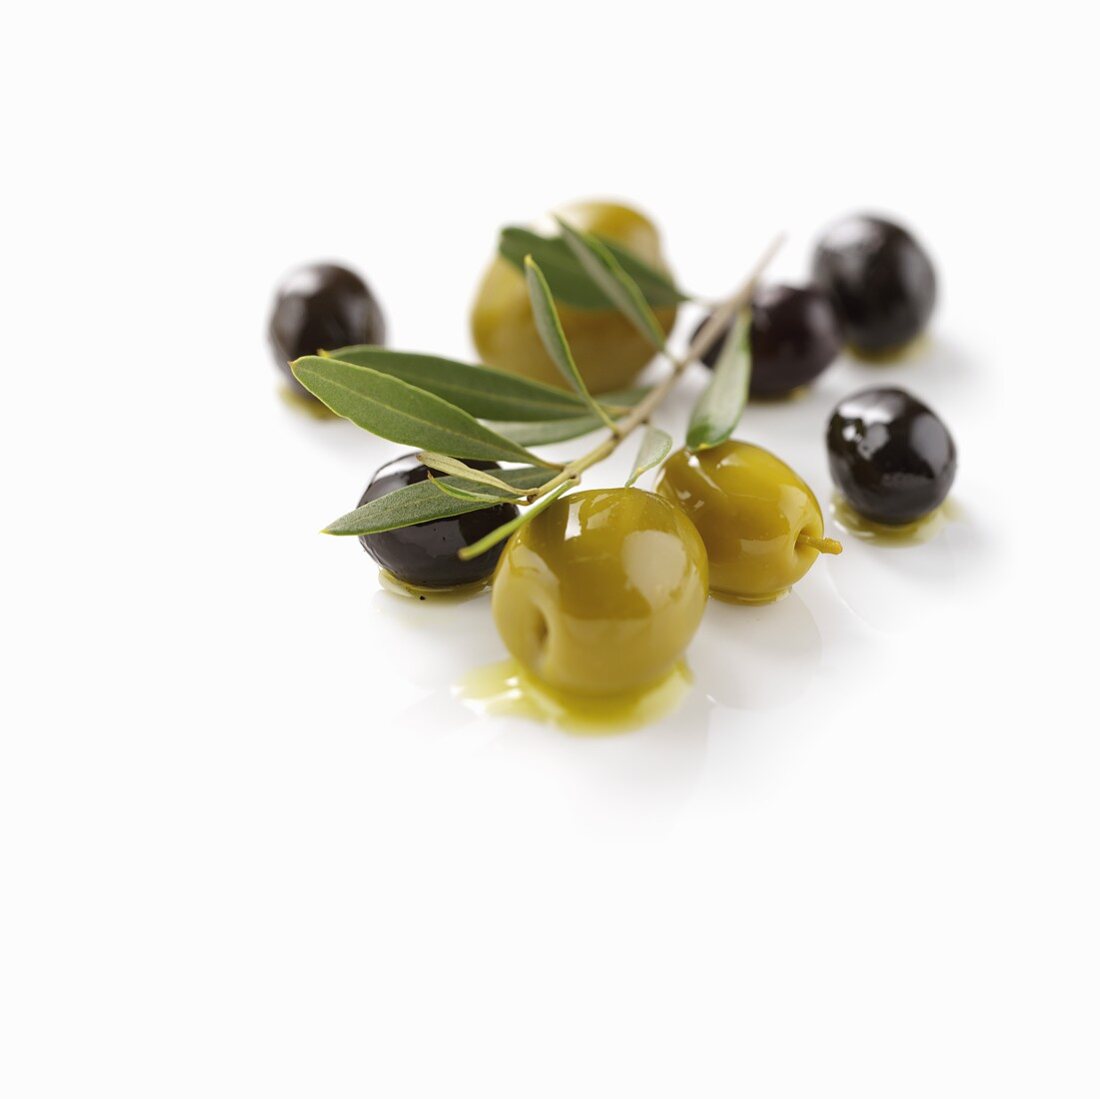 Green and black olives and olive sprig